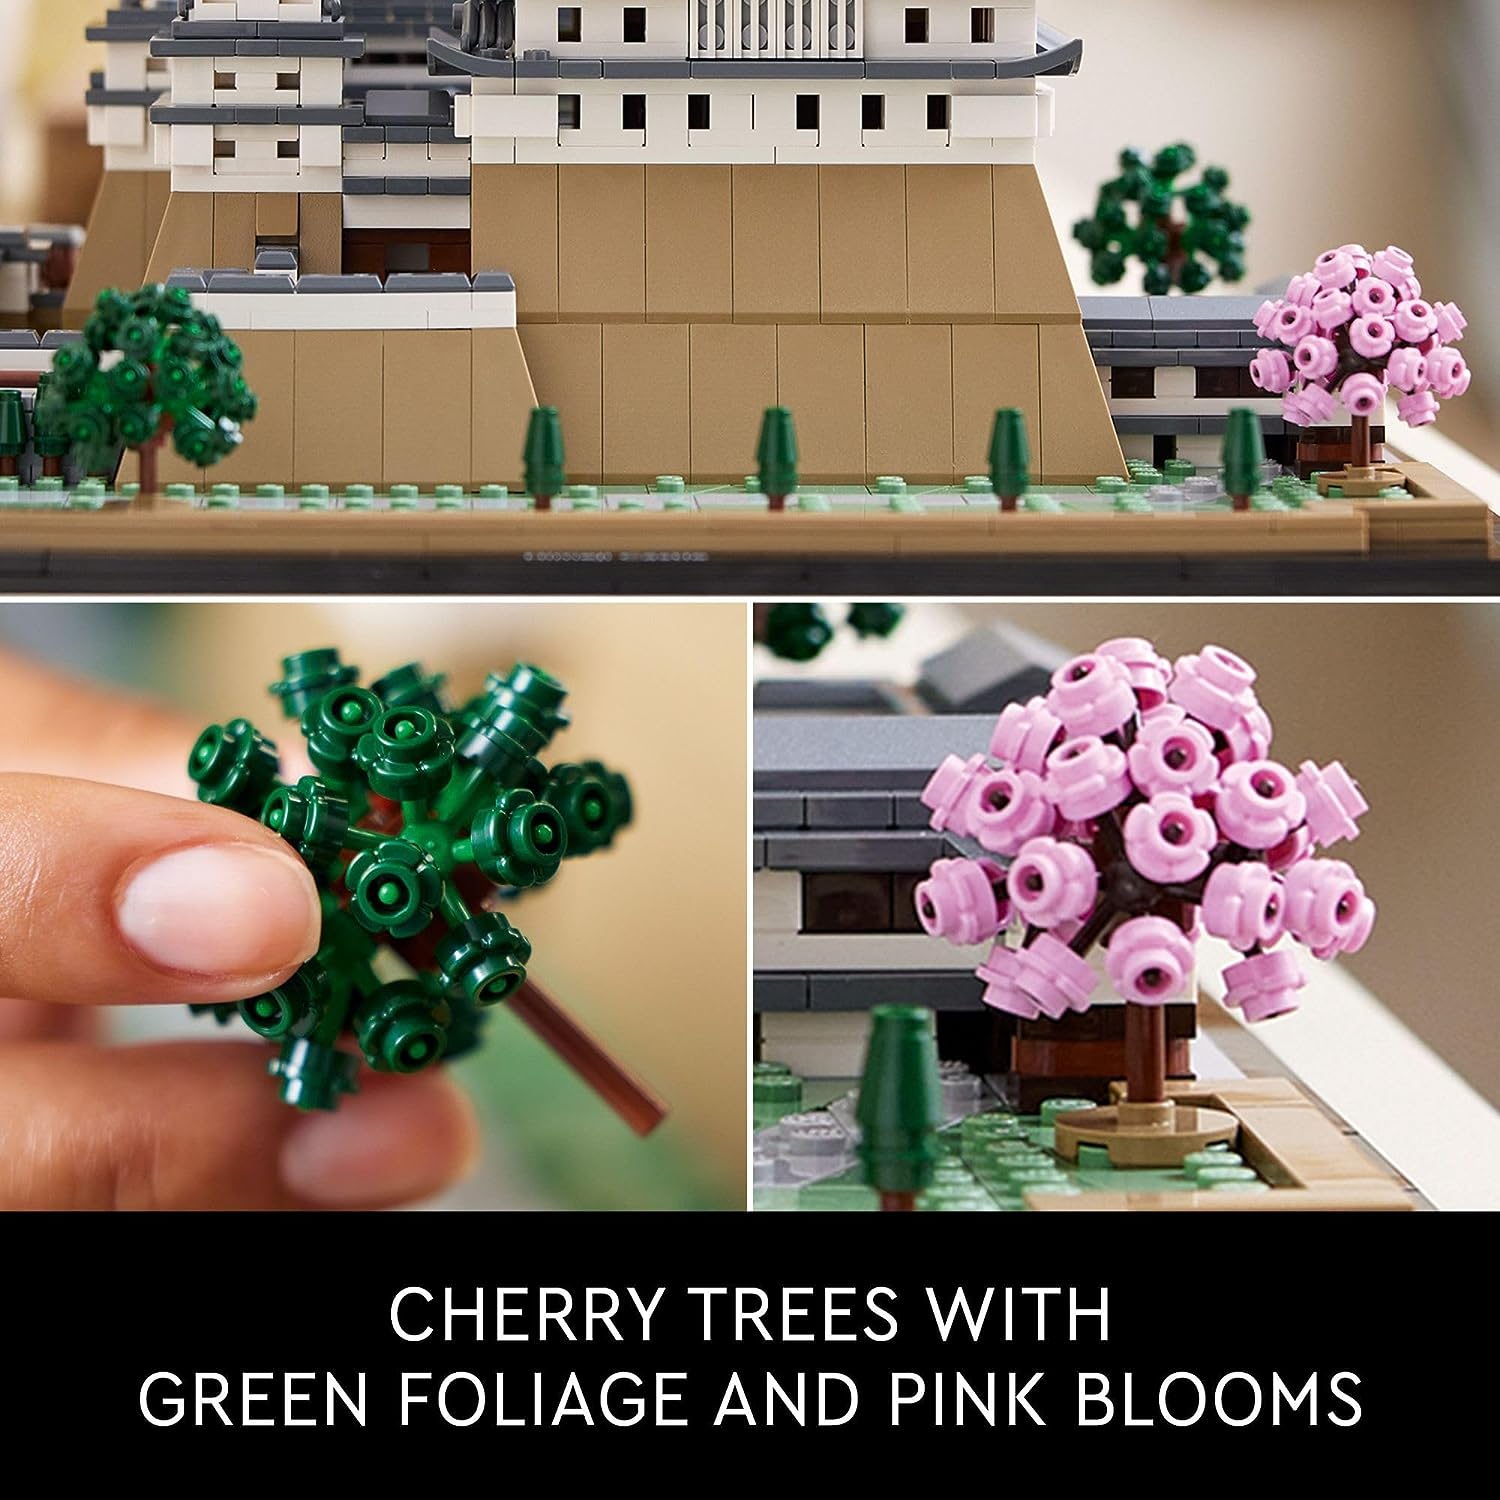 LEGO Architecture Landmarks Collection: Himeji Castle 21060 Building Set - $105